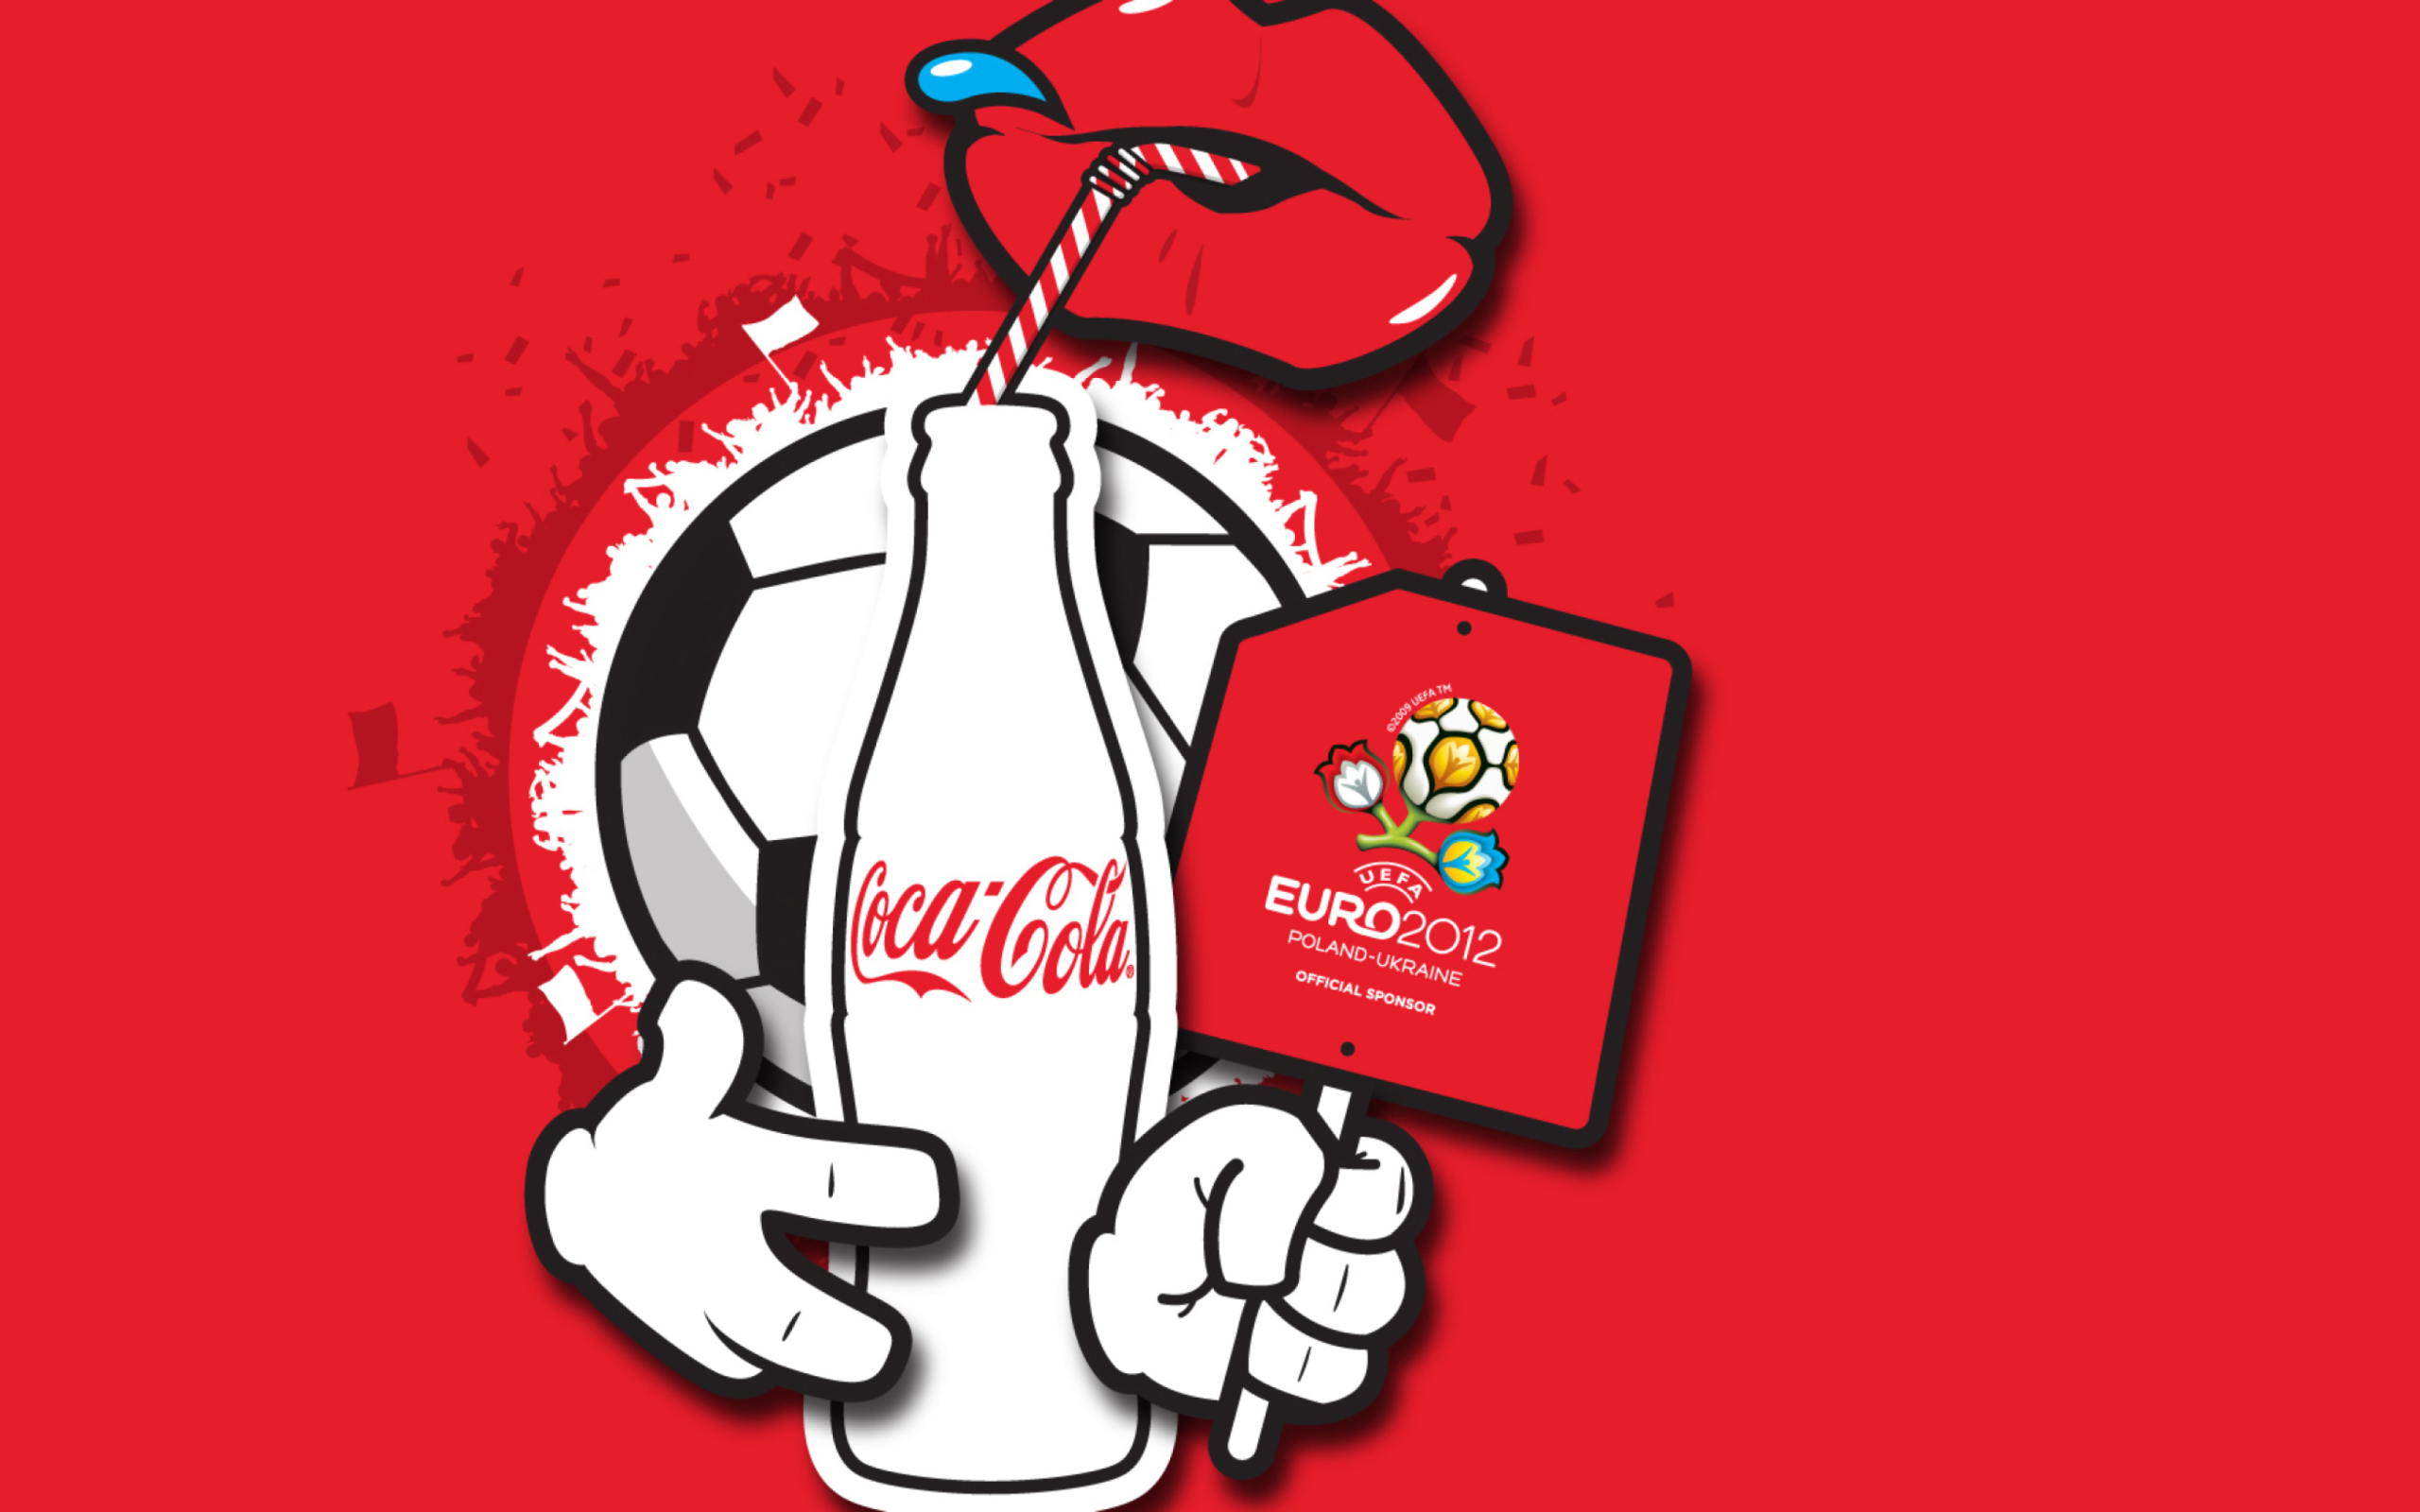 Обои Coca Cola & Euro 2012 full hd 2560x1600